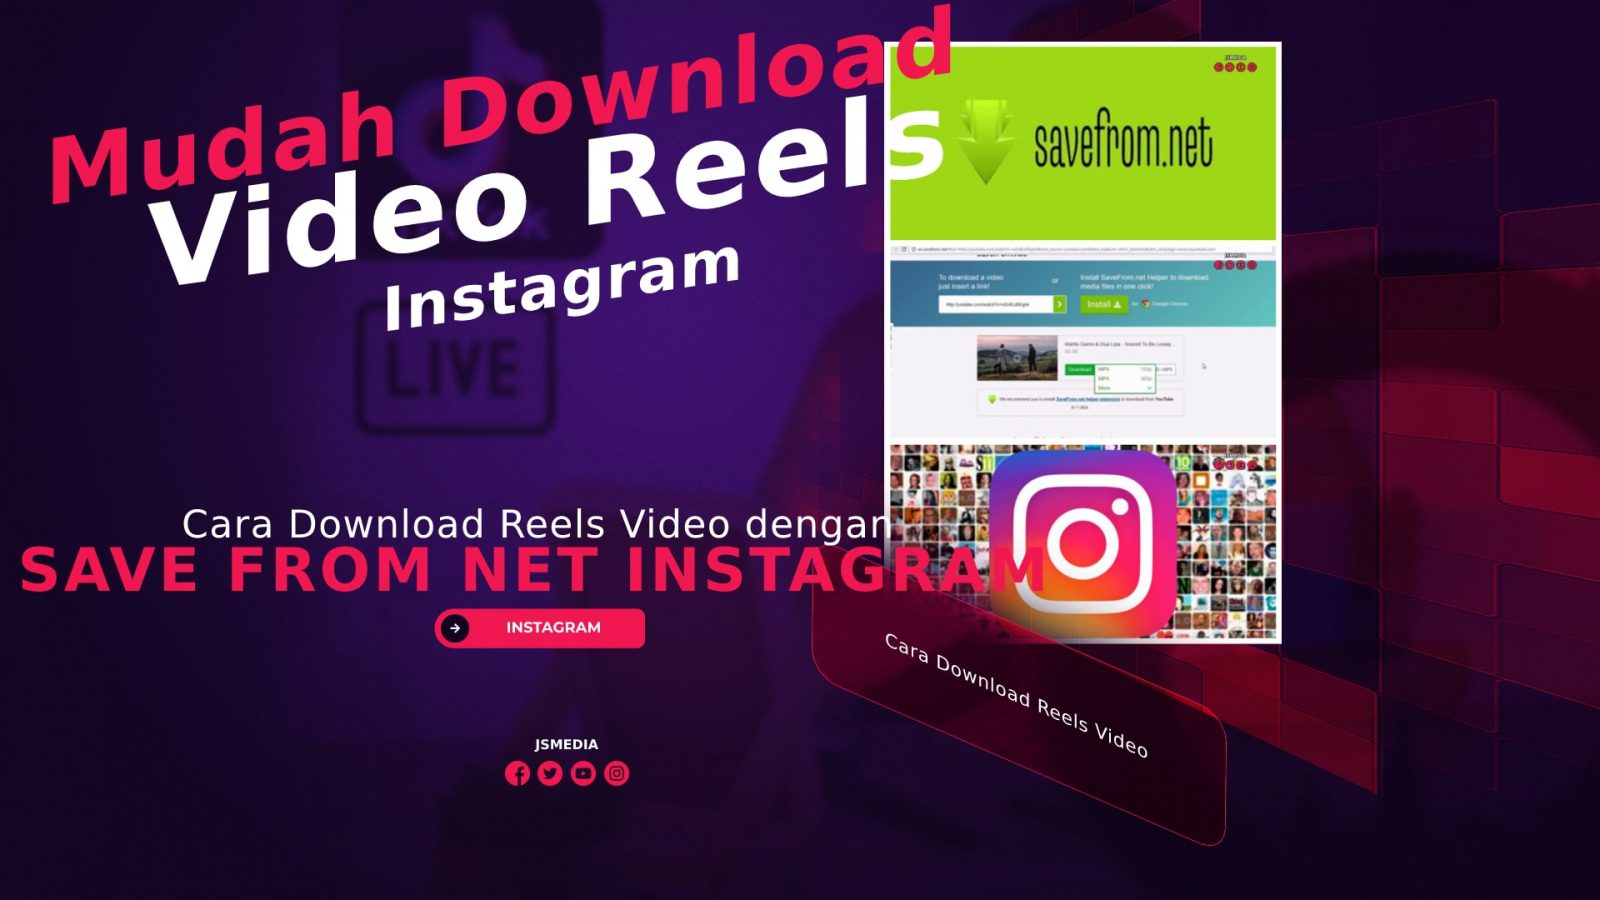 Cara Download Reels Video dengan Save From Net Instagram